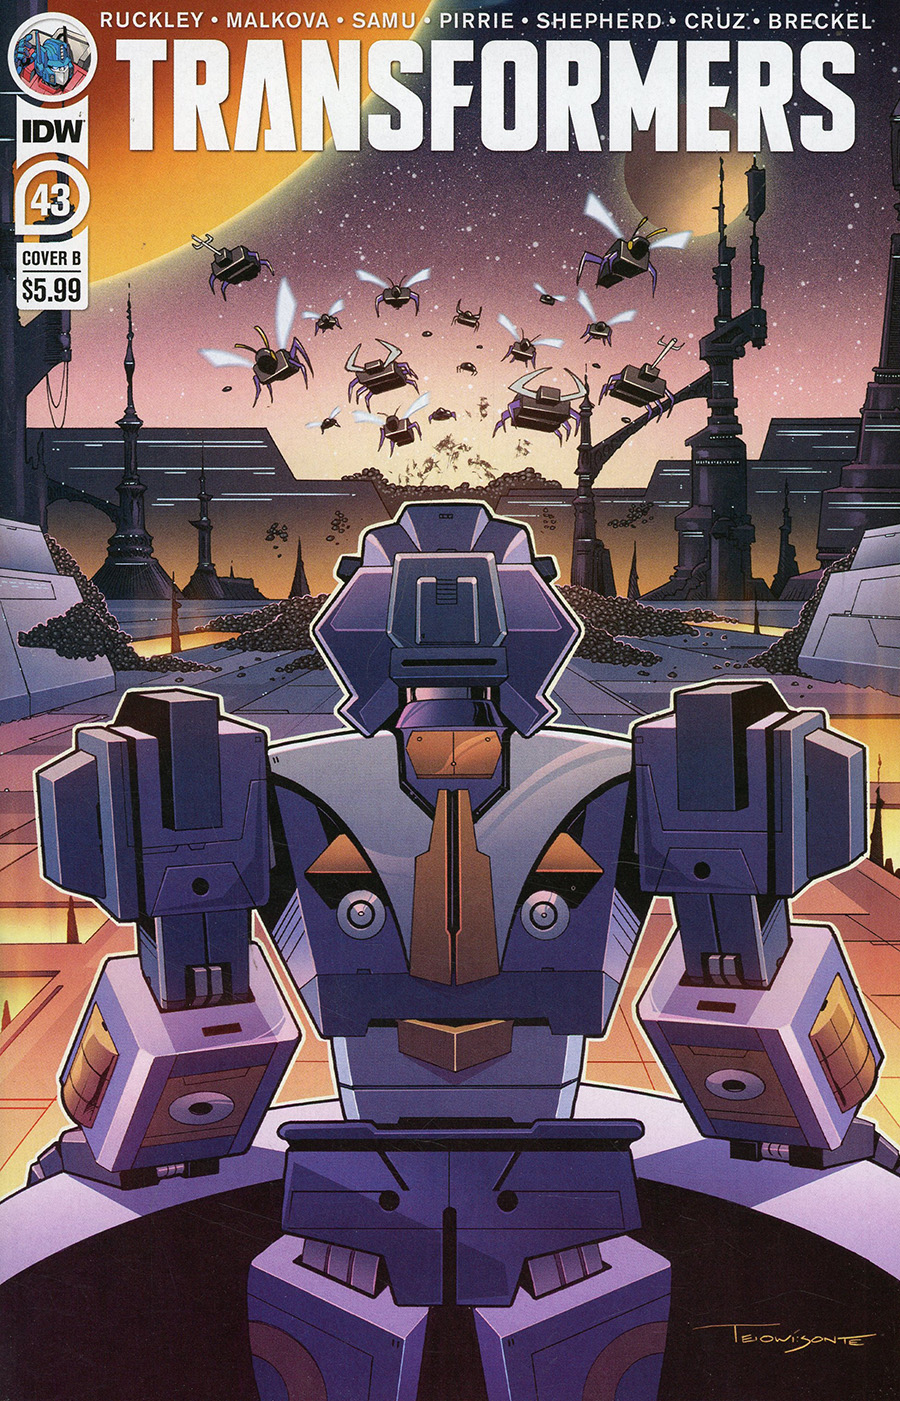 Transformers Vol 4 #43 Cover B Variant Thomas Deer Cover